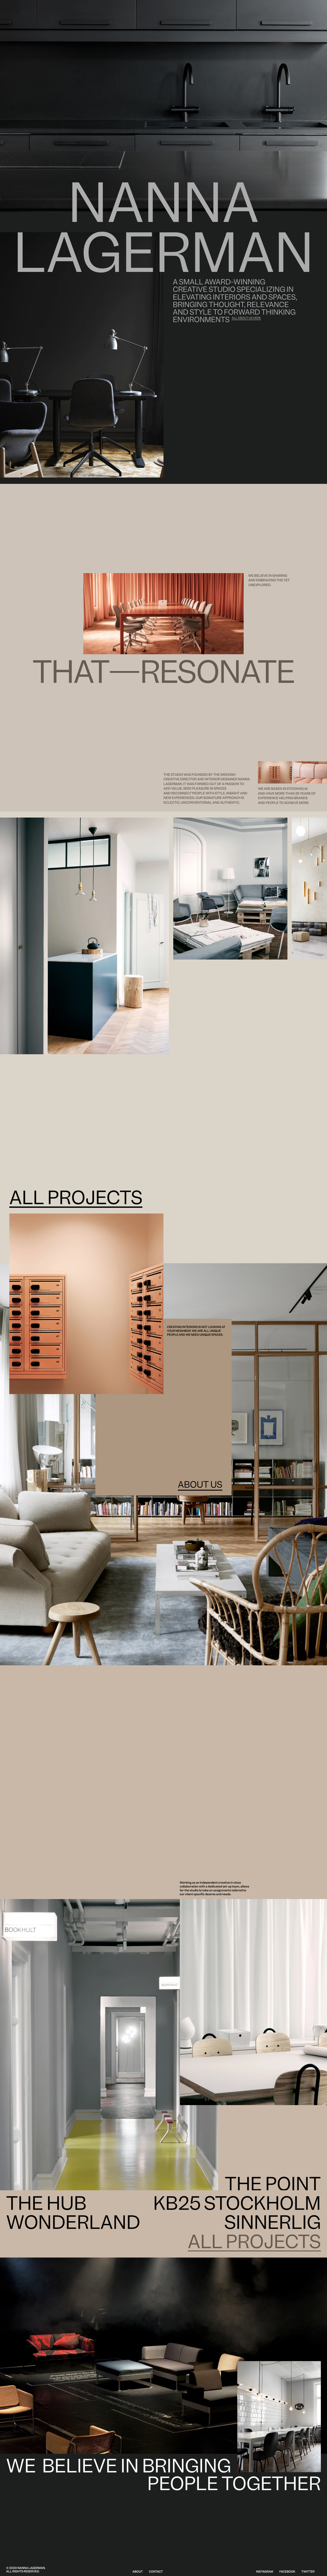 Nanna Lagerman室内设计工作室网站设计